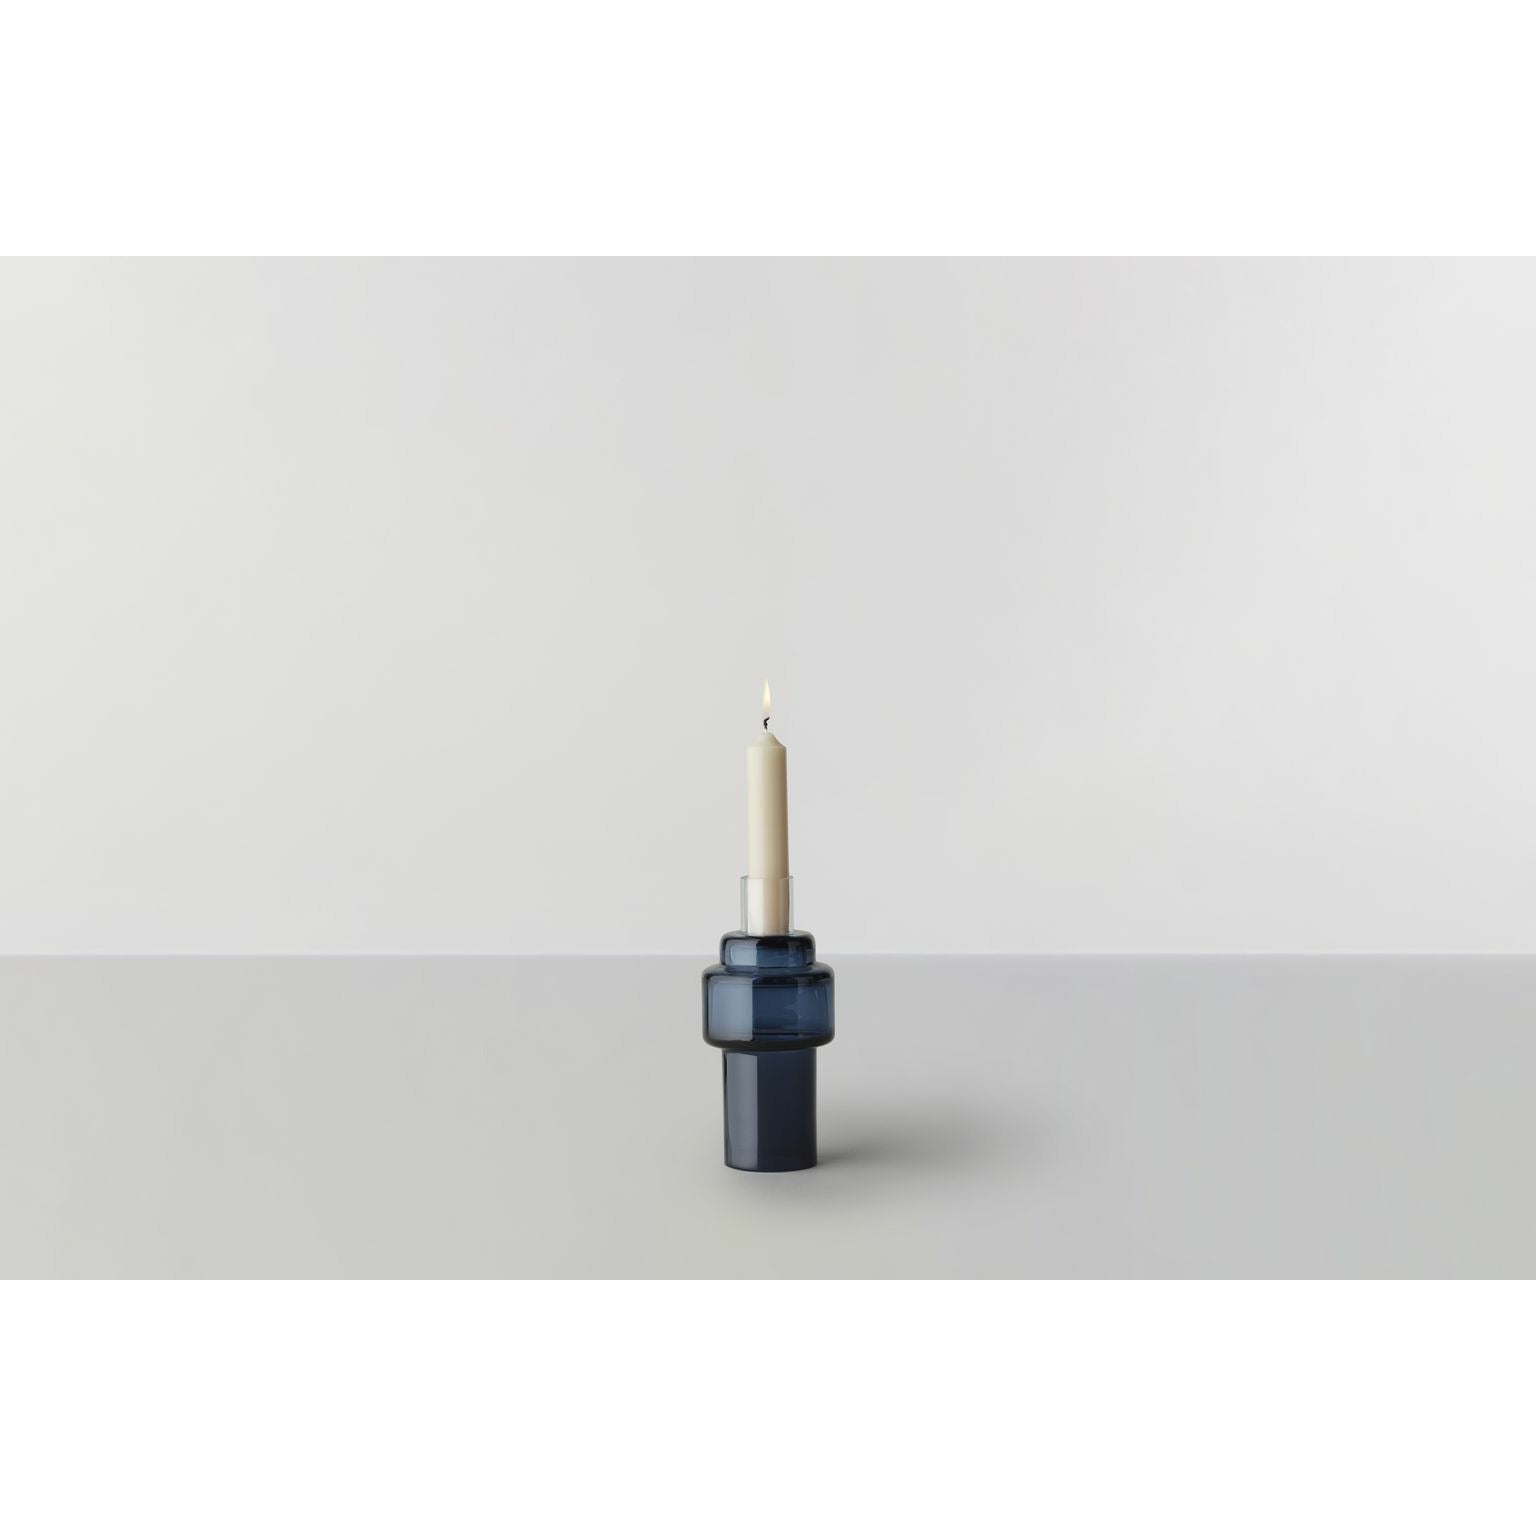 Sbírka RO č. 55 Glass Candlestick, Indigo Blue